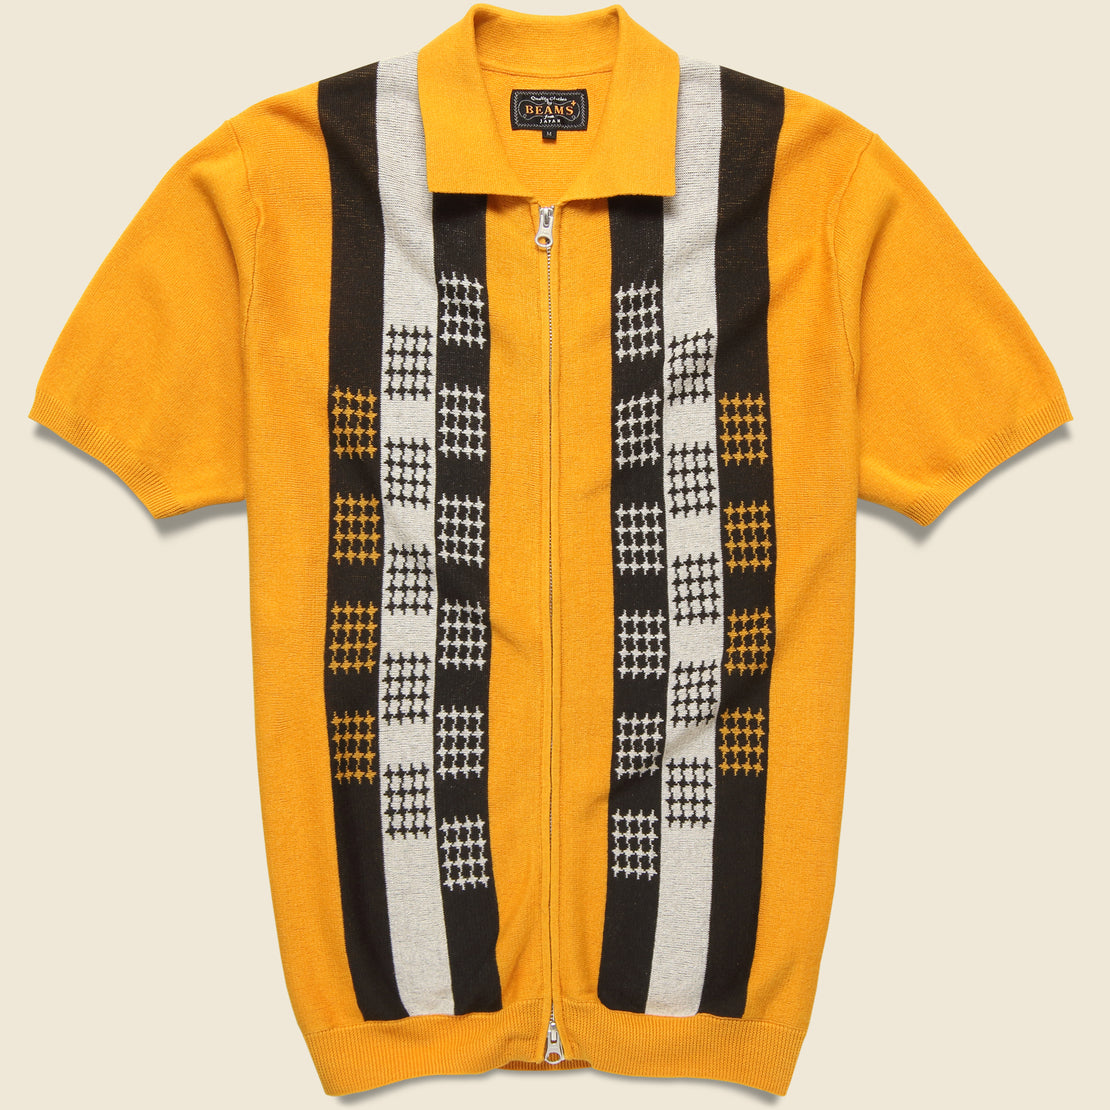 BEAMS+ Zip Knit Polo - Orange/Black